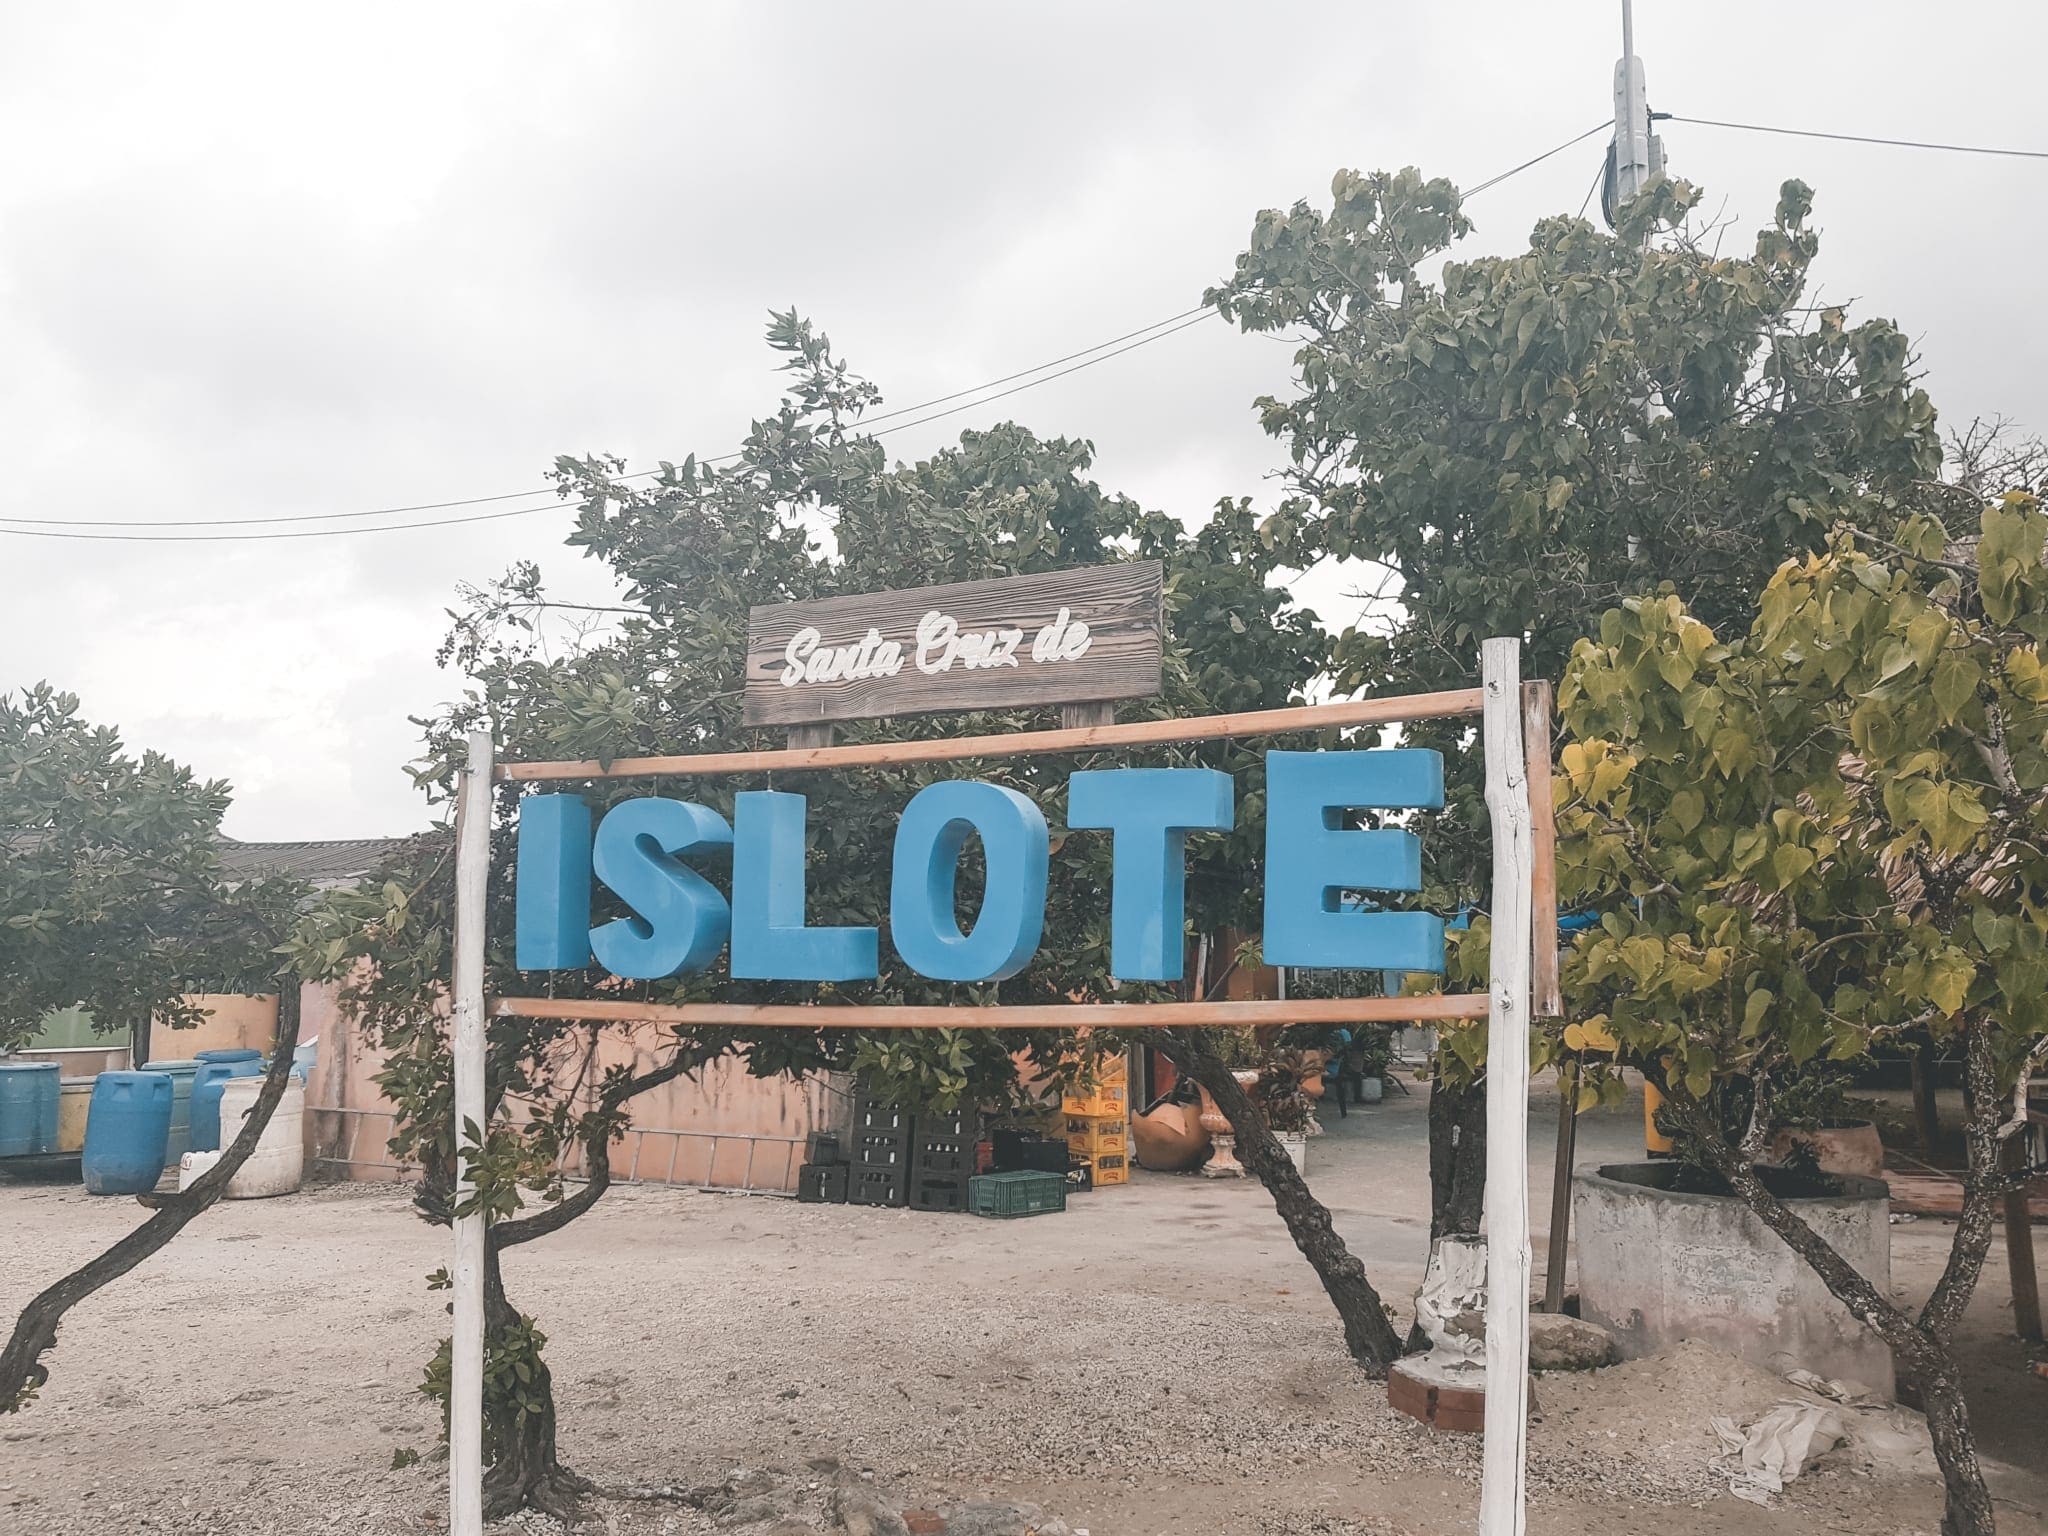 , Santa Cruz del Islote is het dichtstbevolkte eiland ter wereld